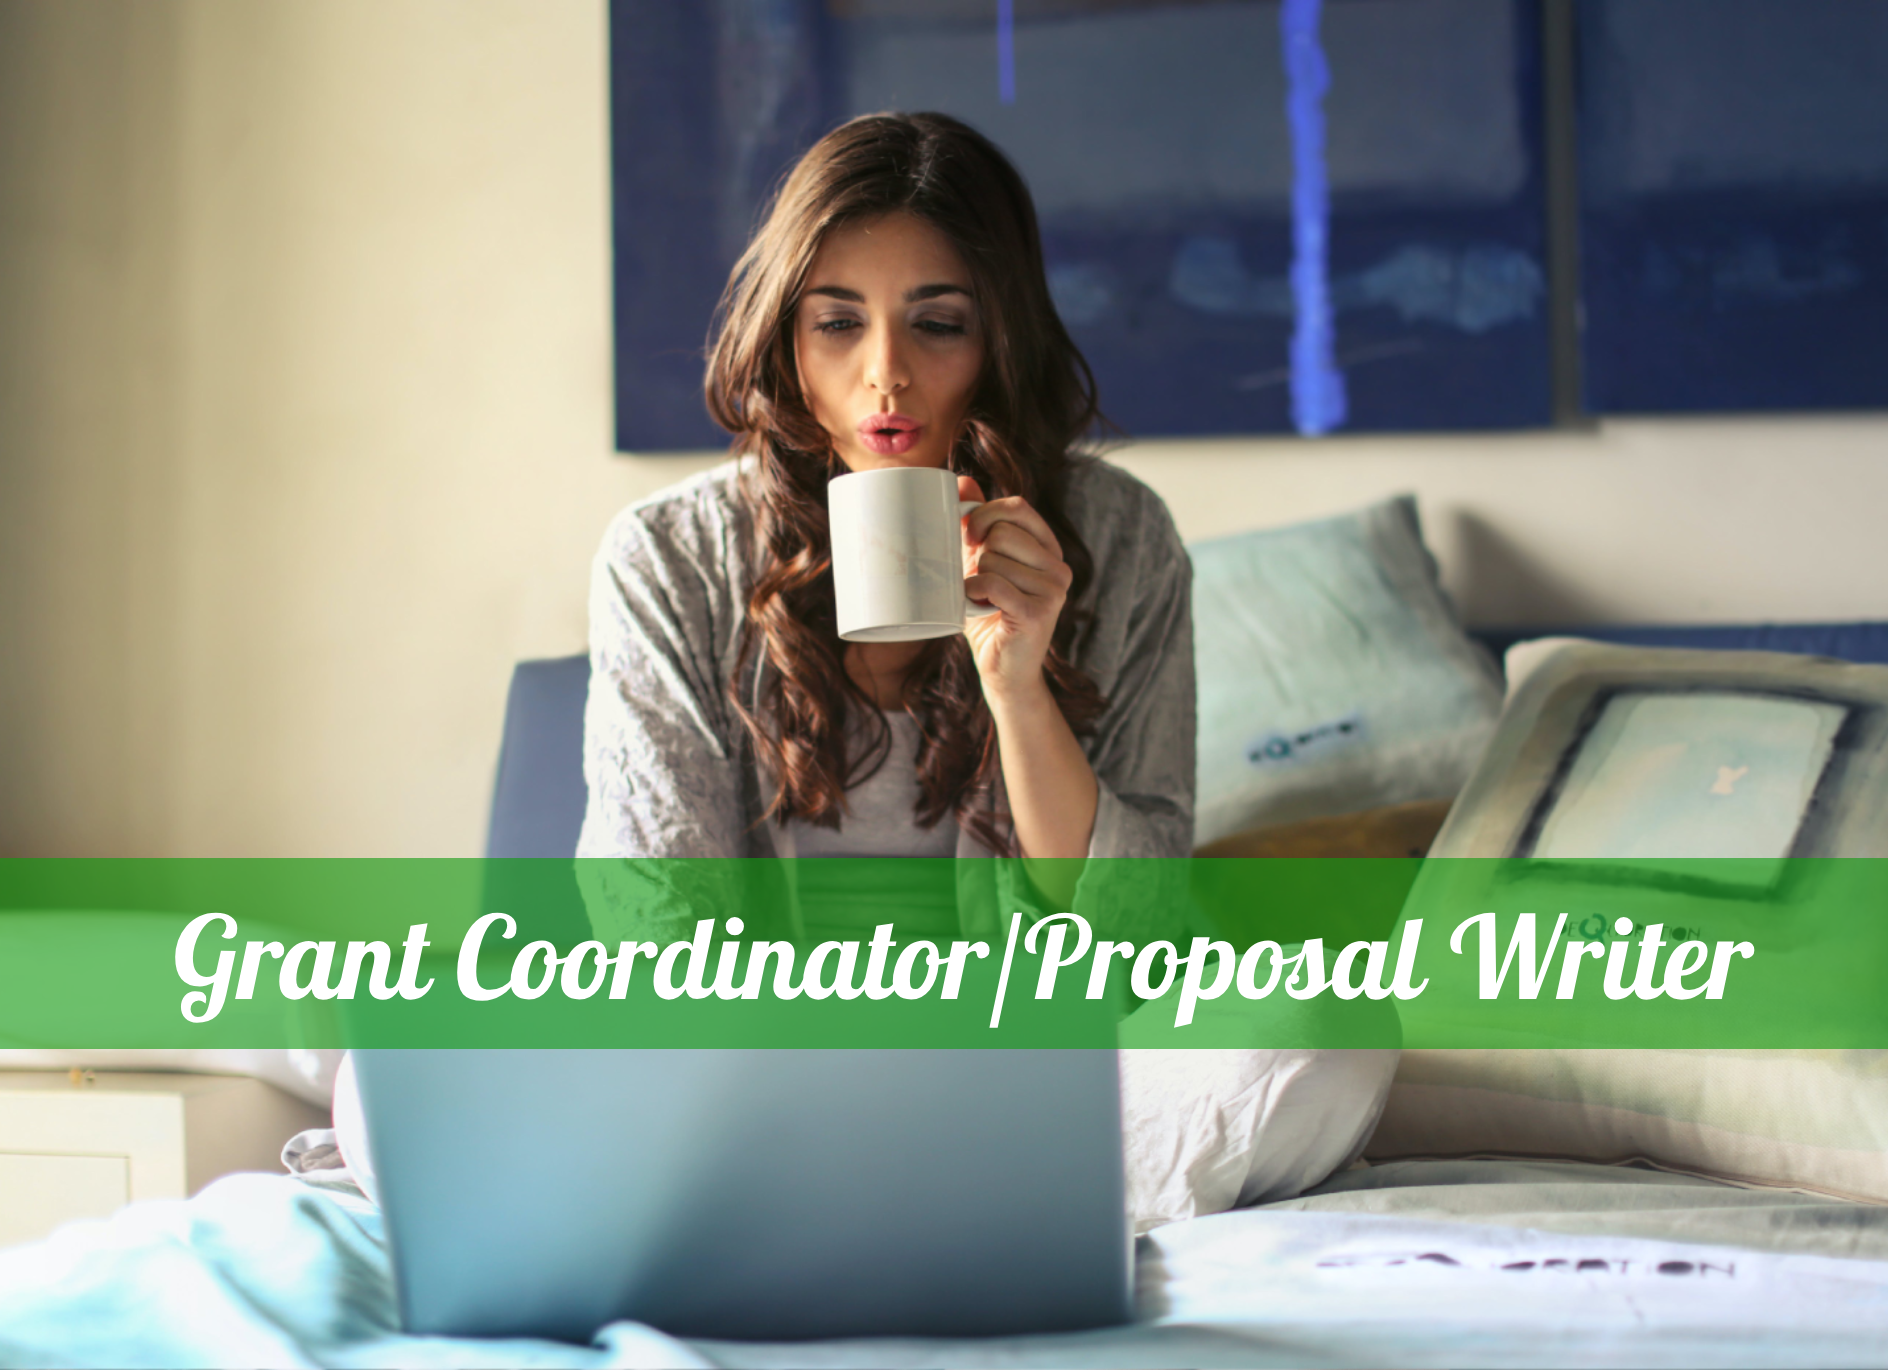 Grant Coordinator/Proposal Writer (International Applicants Only)